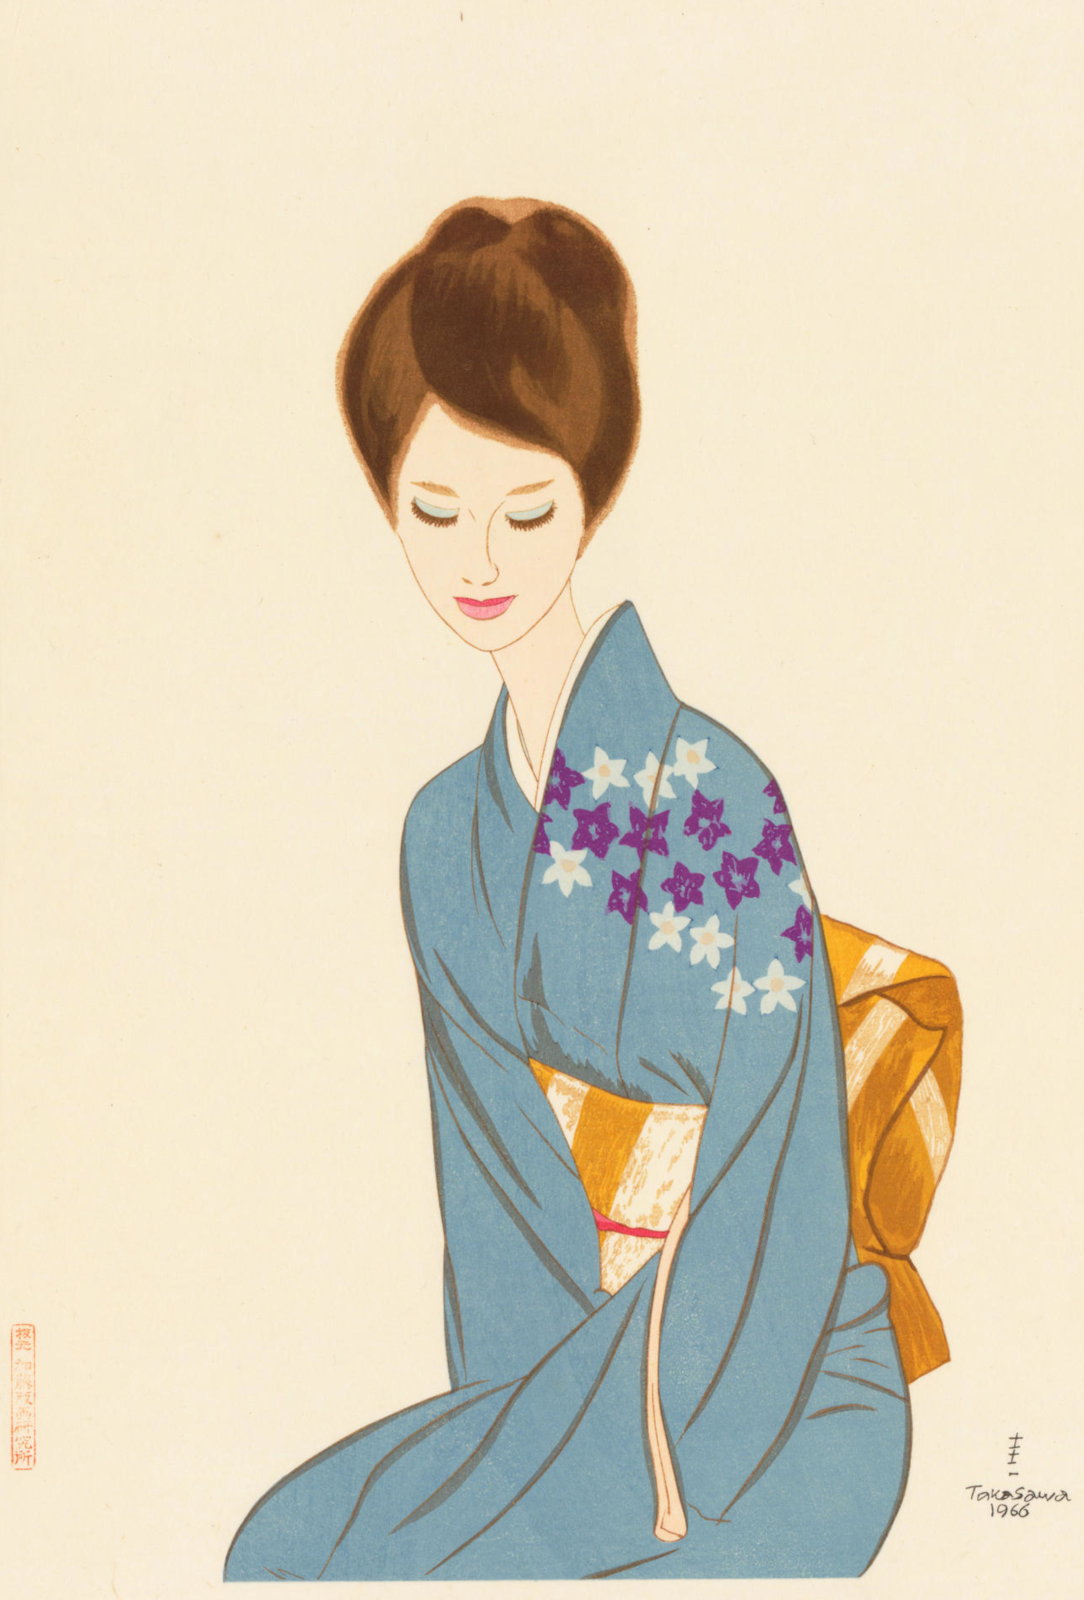 Takasawa Keiichi “[Untitled 1]” 1966 woodblock print